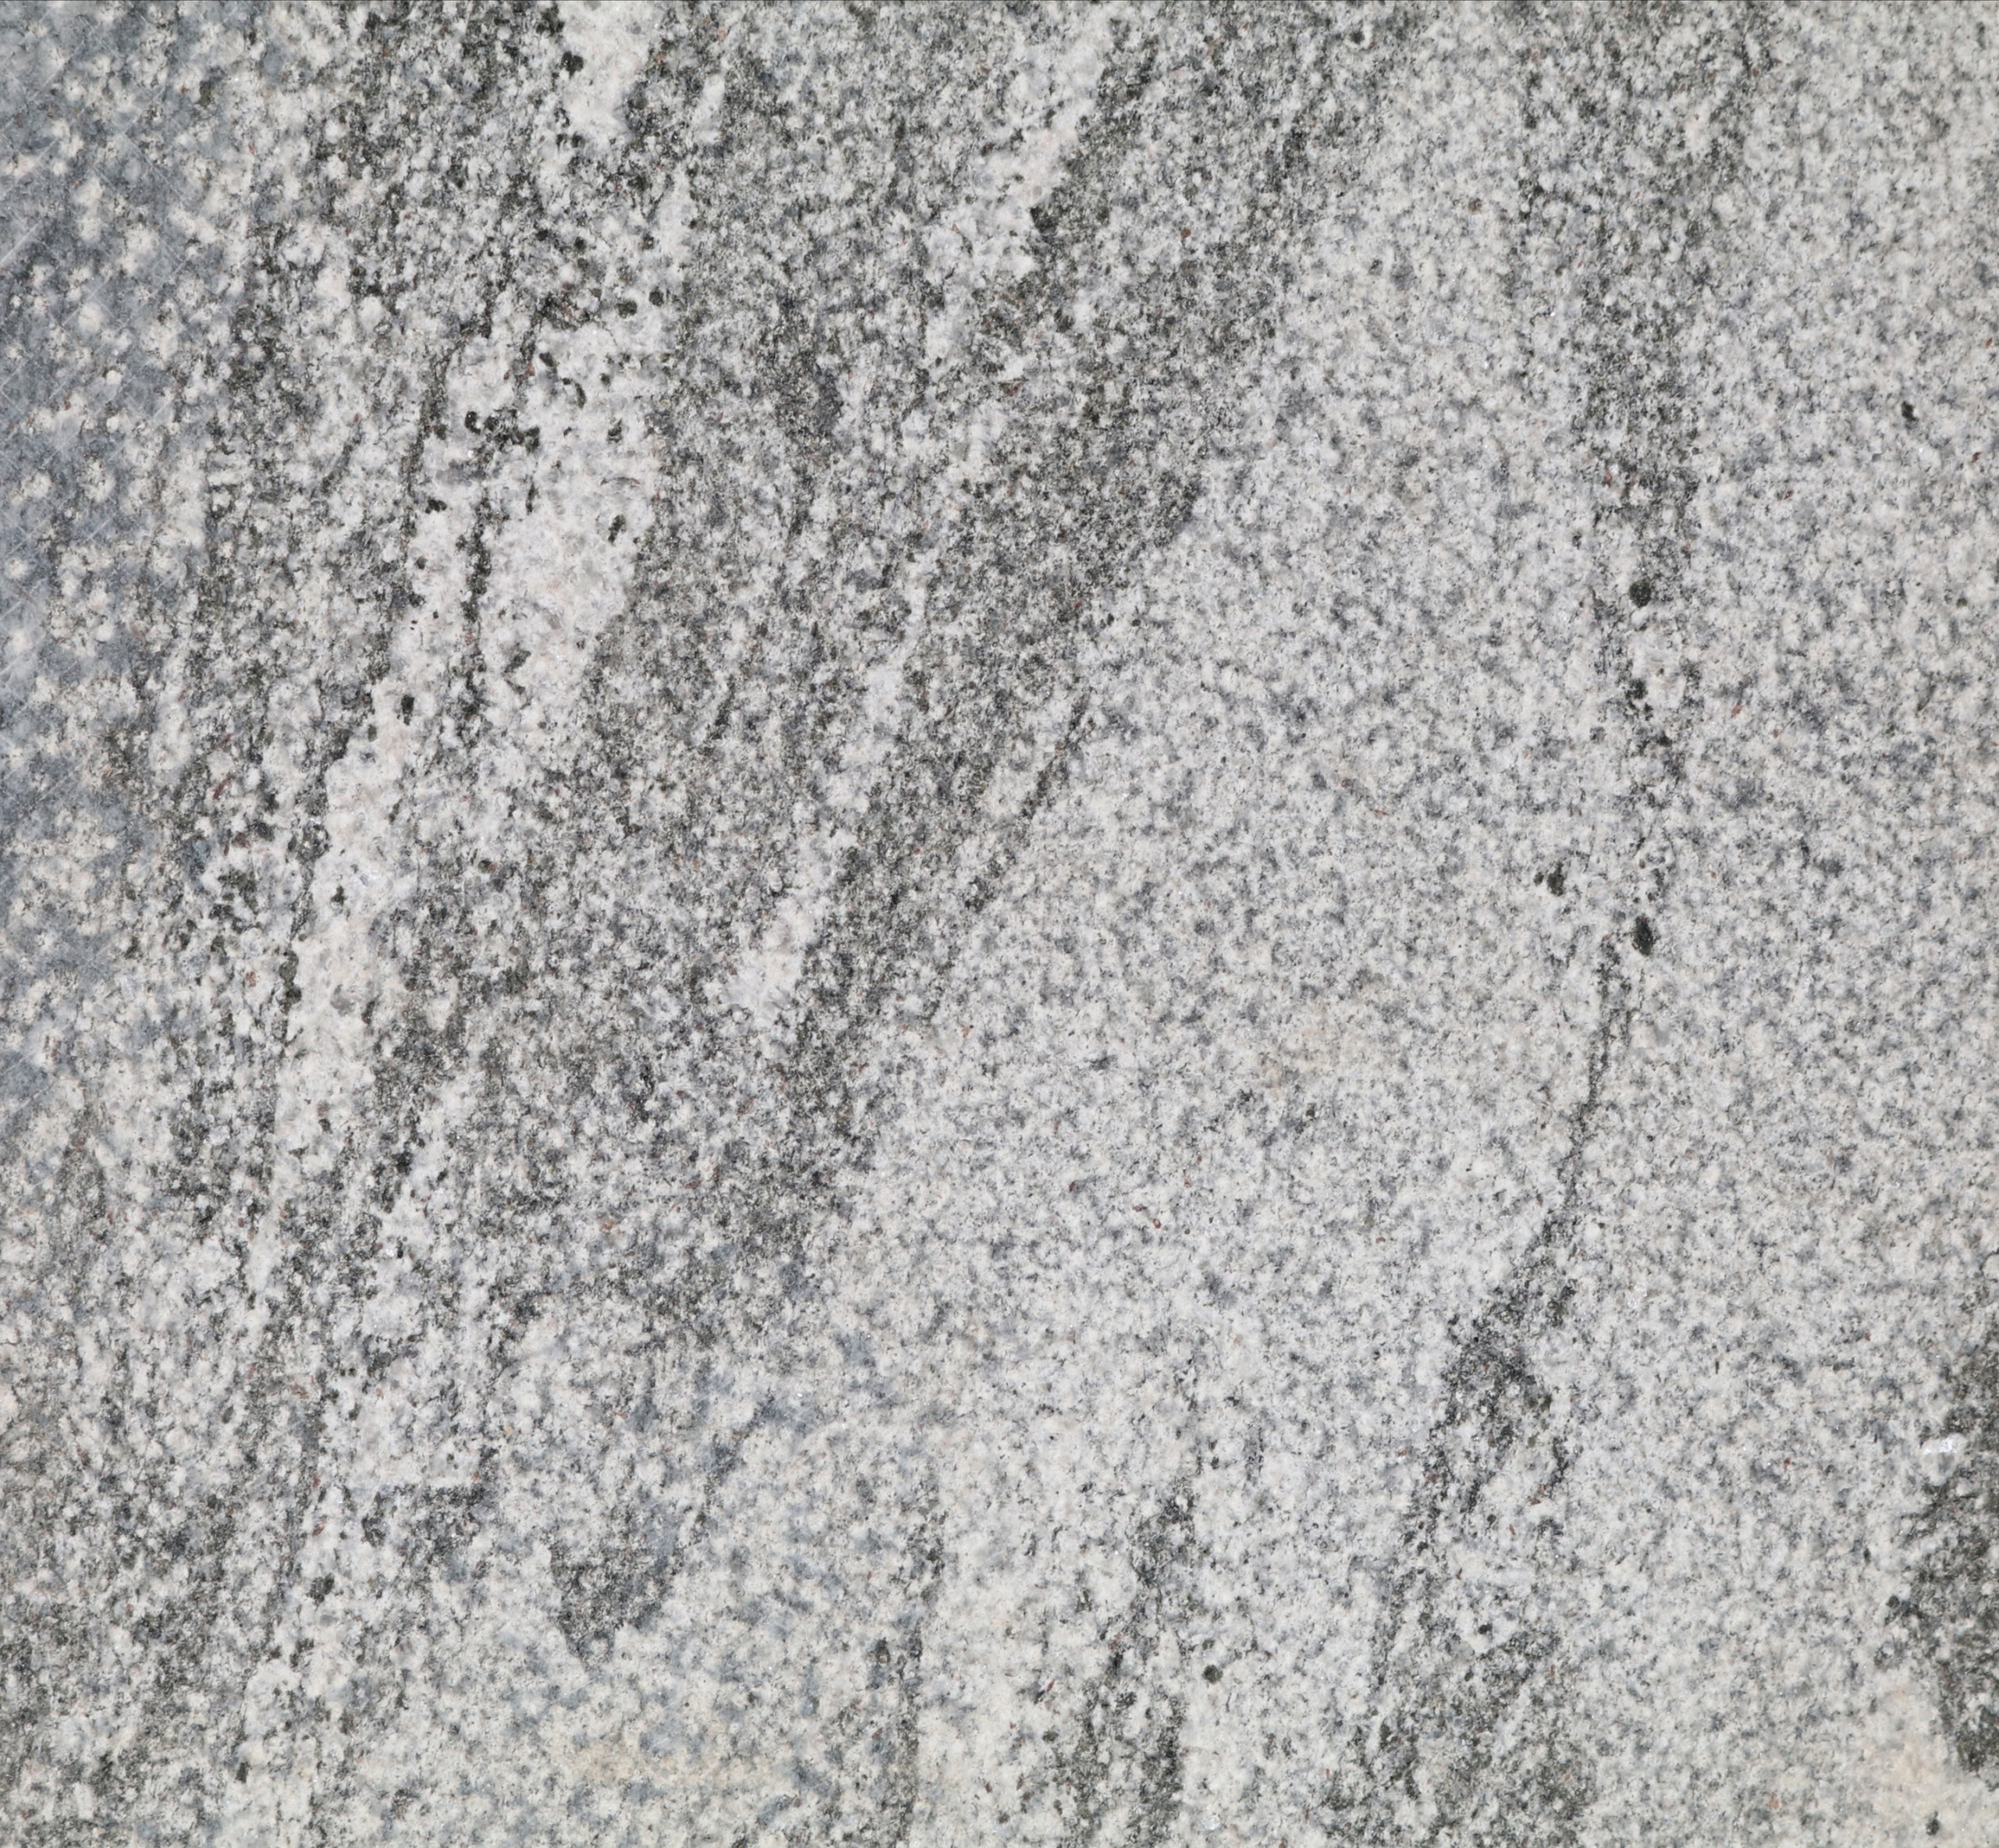 Skogsfjorden granit closeup